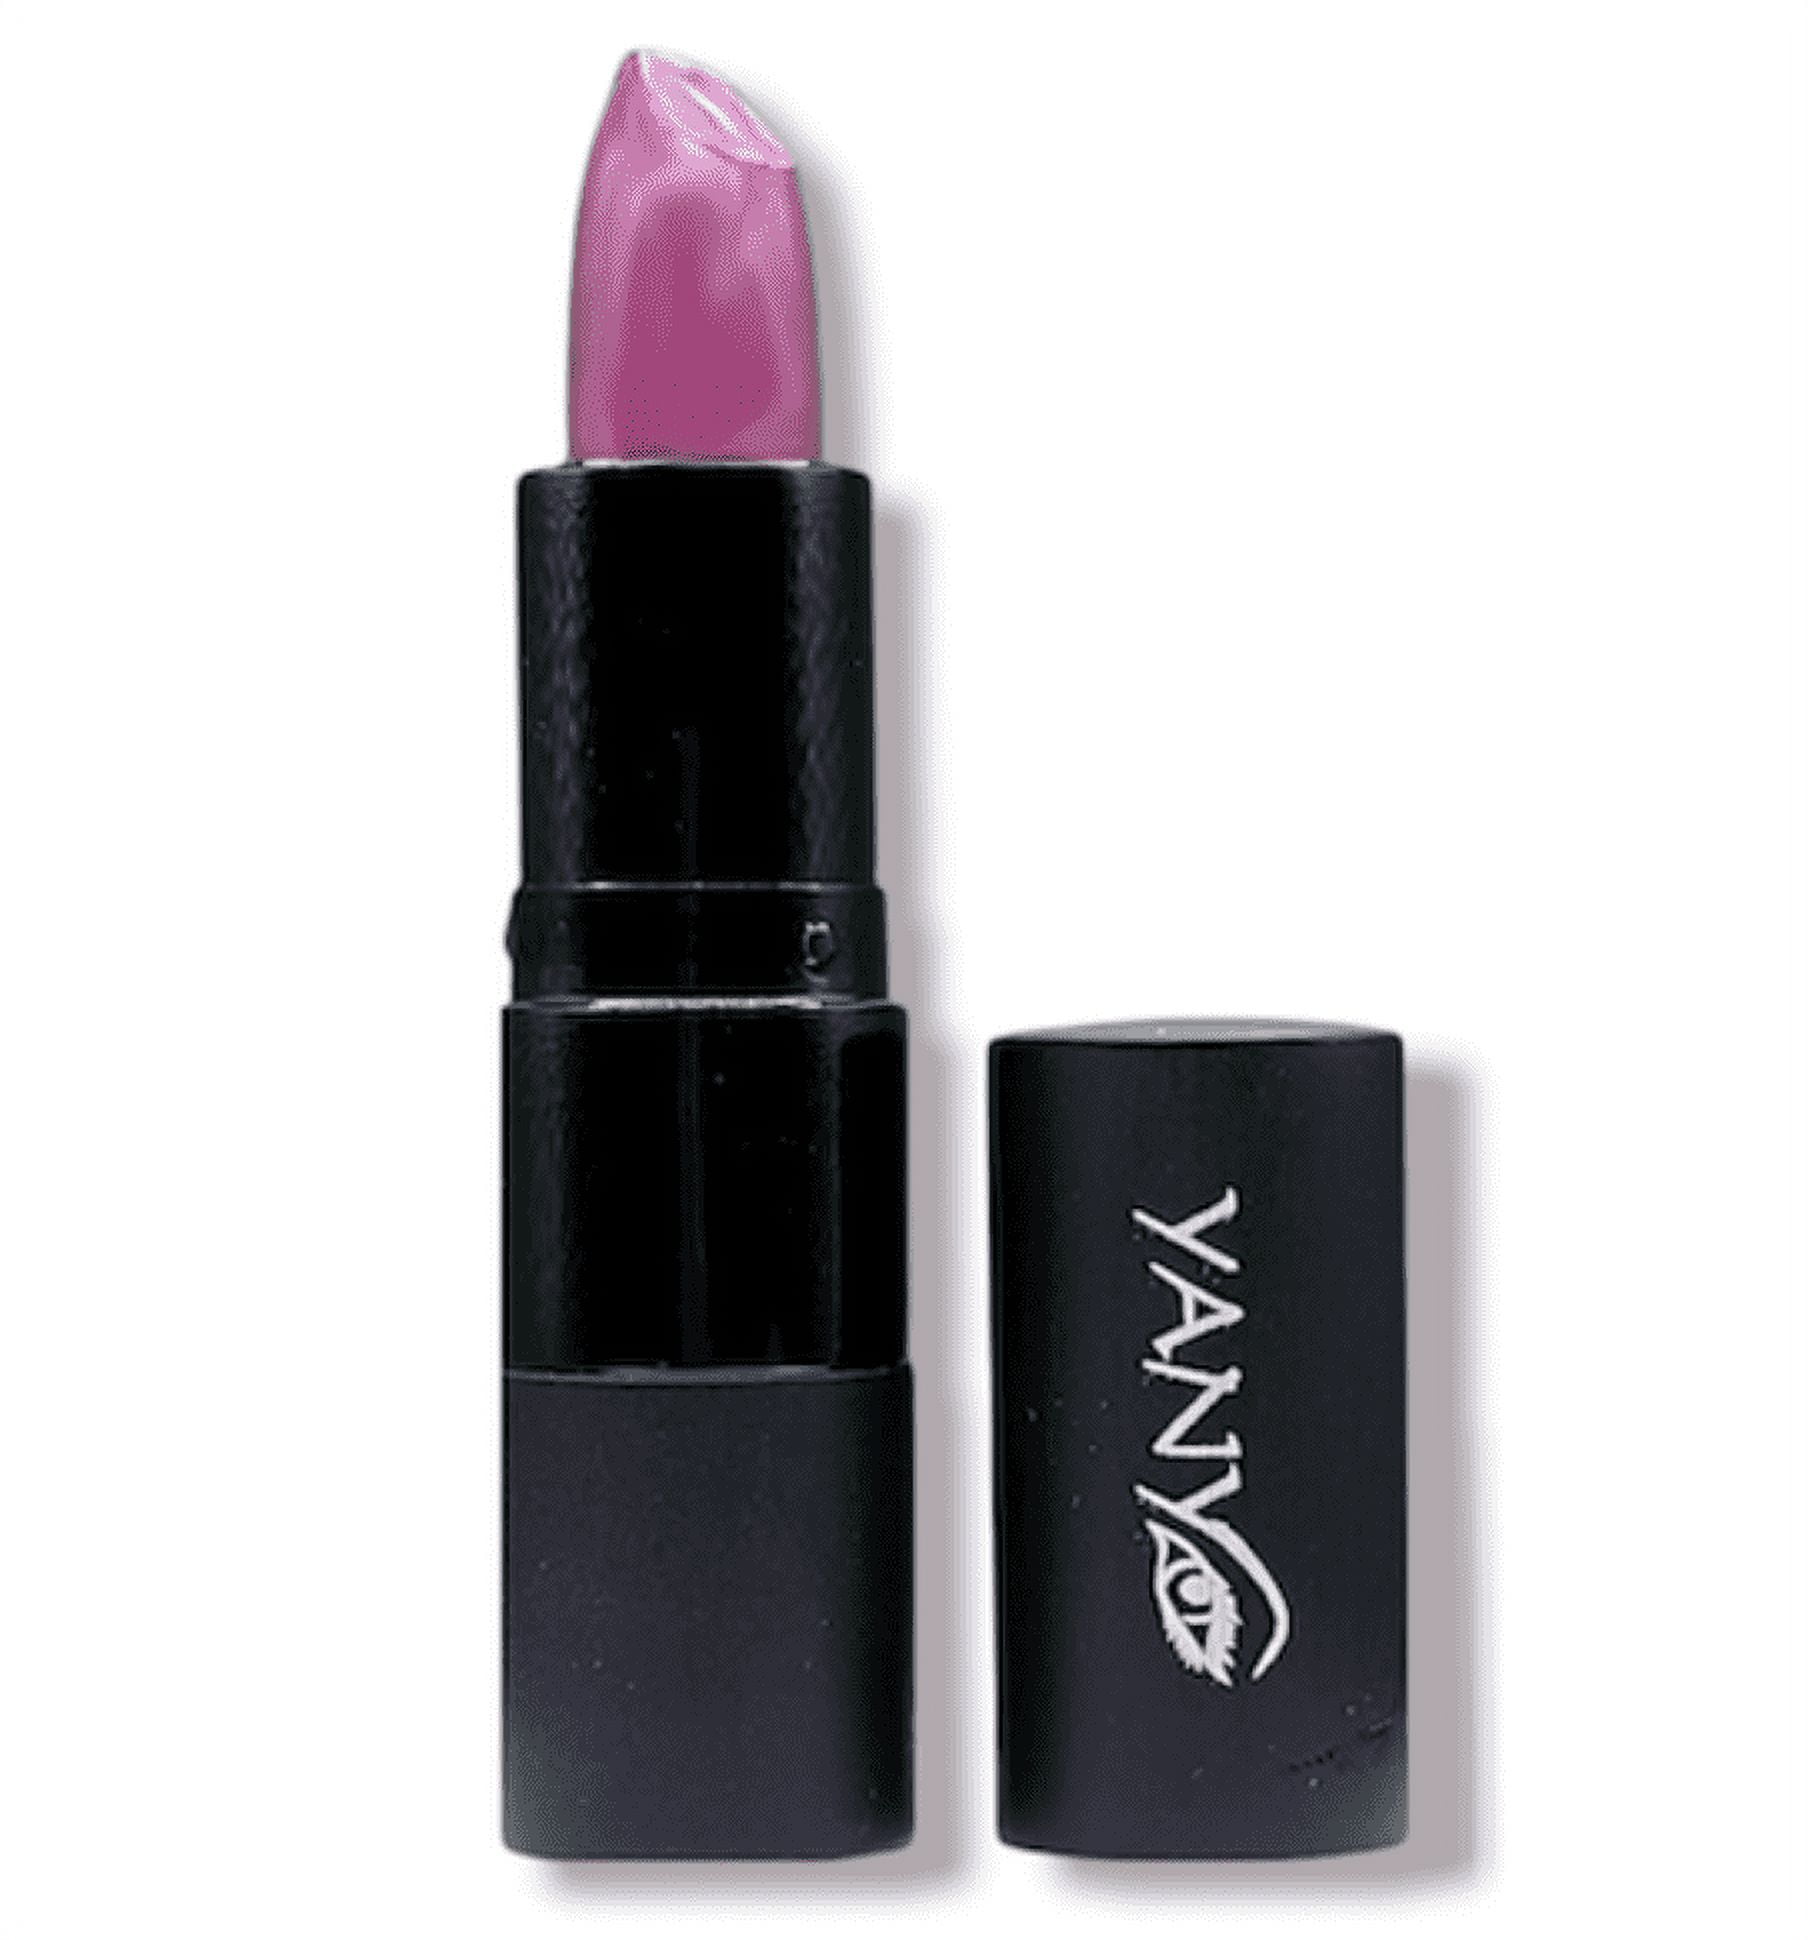 YANY Beauty - Bonita Moisturizing Lipstick For Soft, Kissable Lips -  Pigment Rich - Cream Finish - Long-Lasting Lip Color - Cruelty Free  Cosmetics - Pink Shade - 3.8 g / 0.13 oz